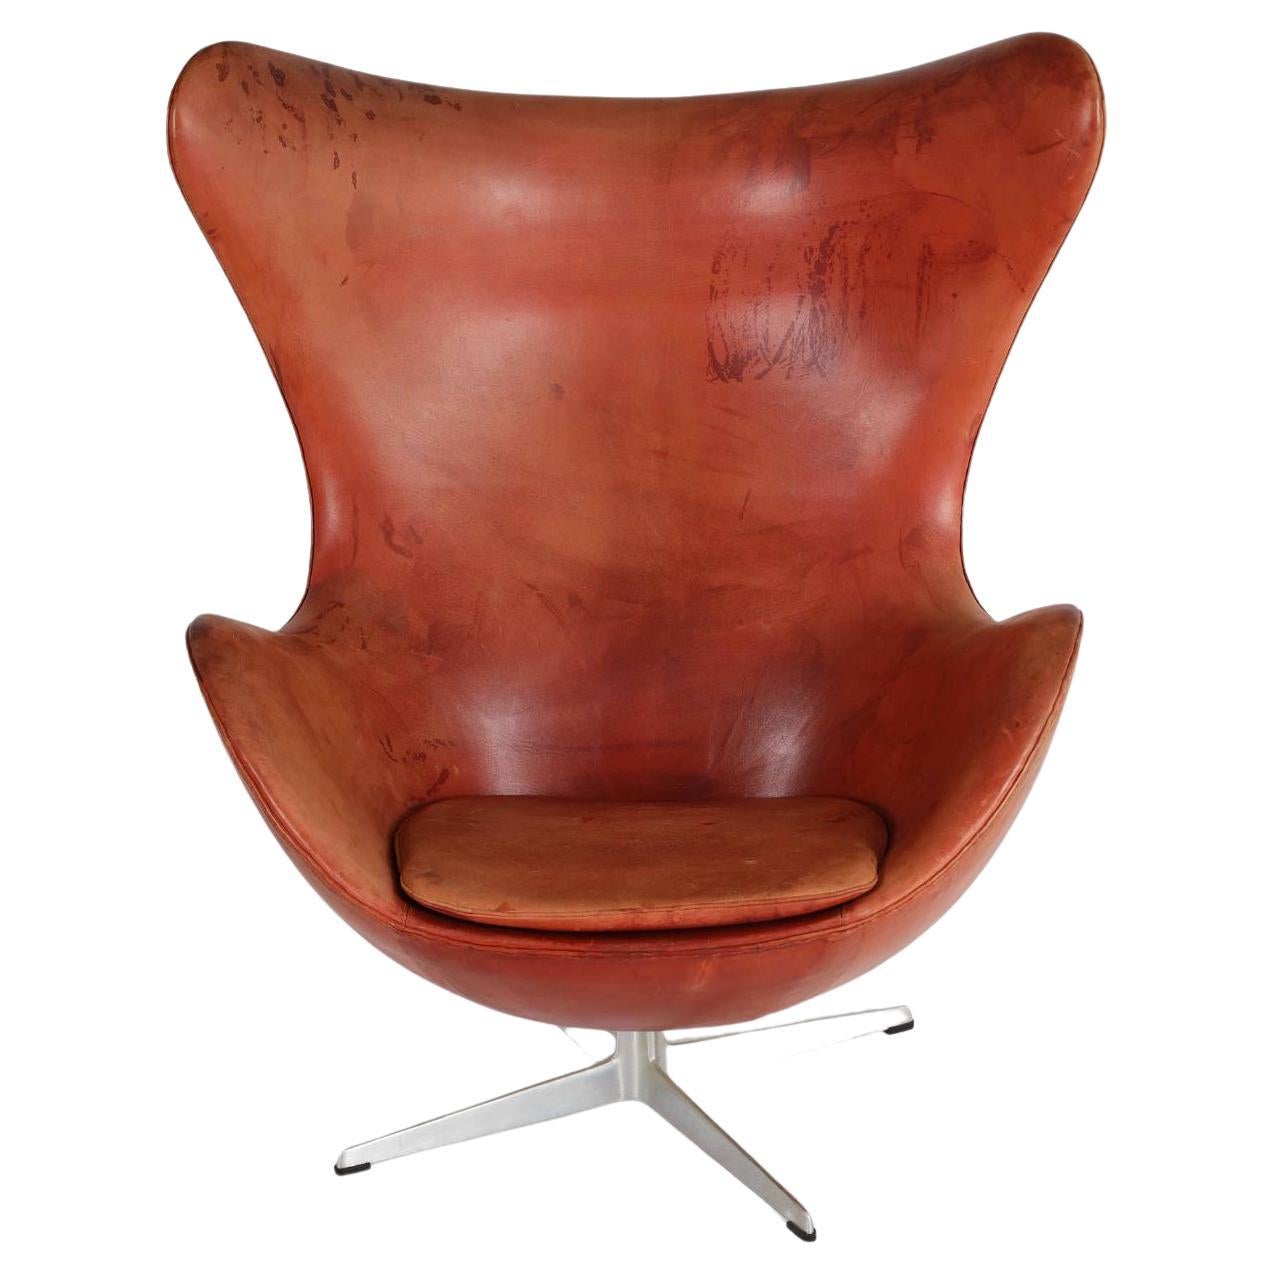 Arne Jacobsen Iconic Egg Chair Cognac Leather Early 60s Original Fritz Hansen